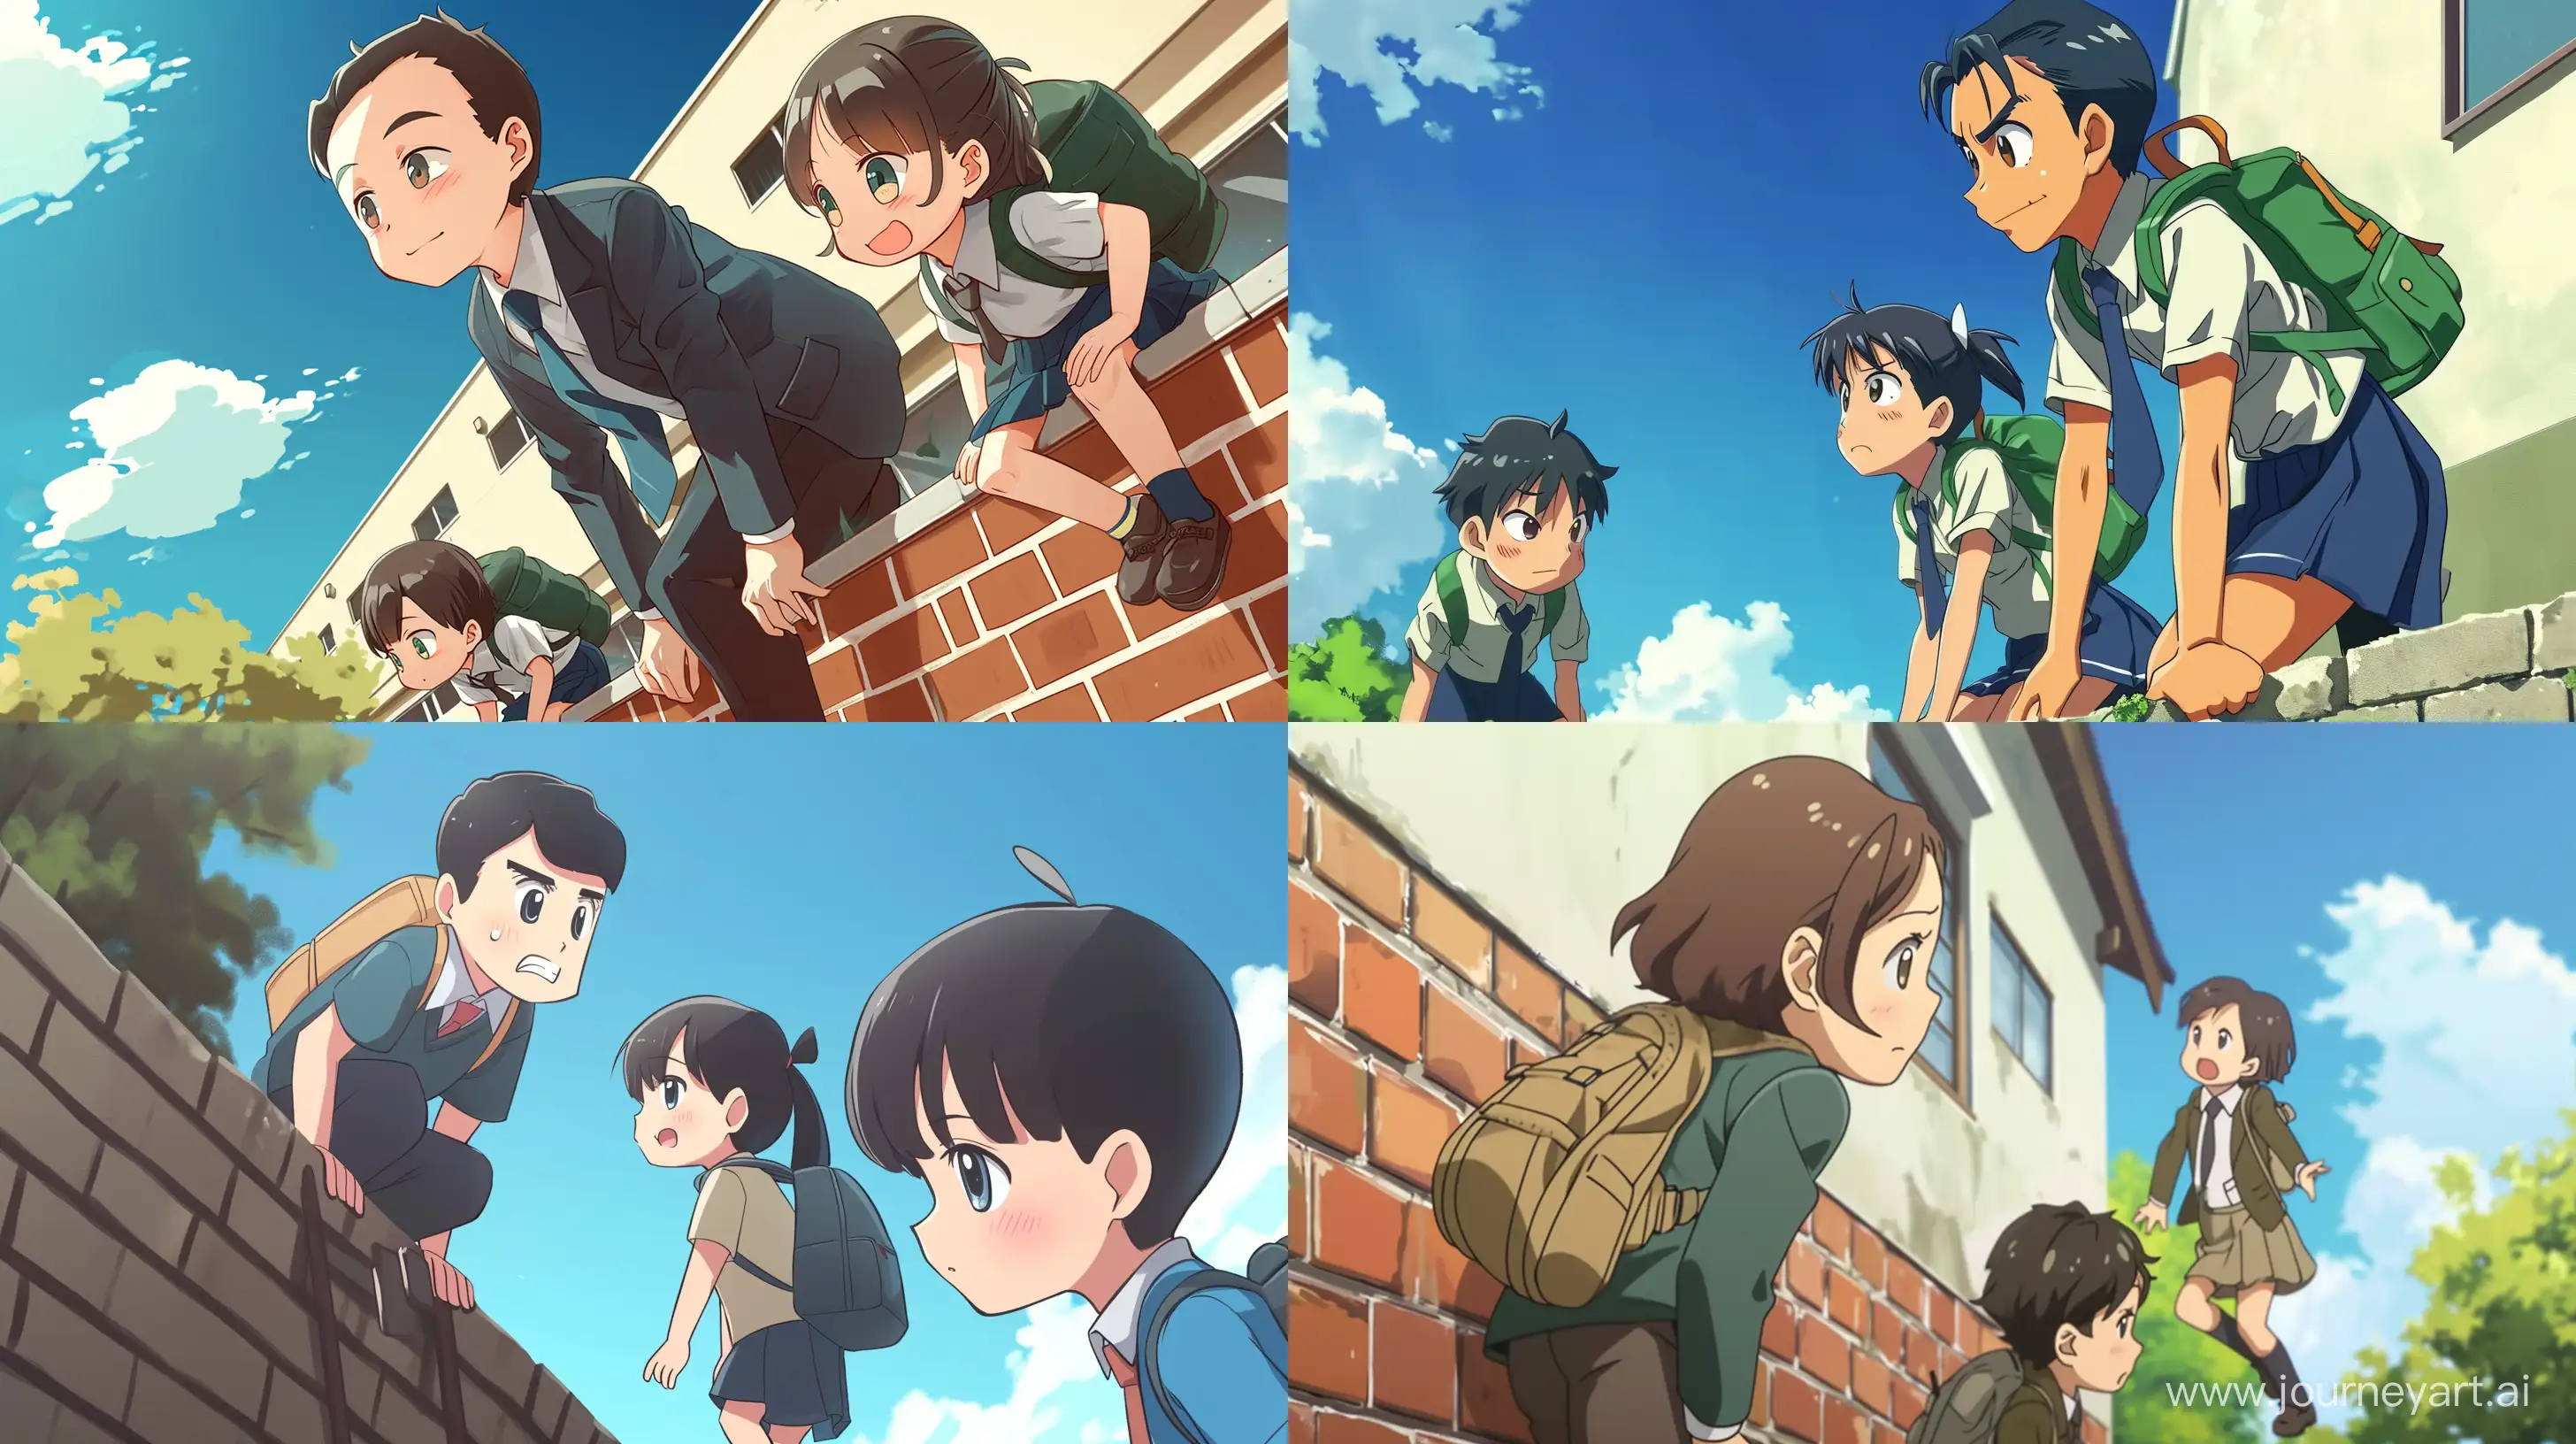 Chibi-Style-Anime-Scene-Teacher-Watches-Students-Climbing-School-Wall